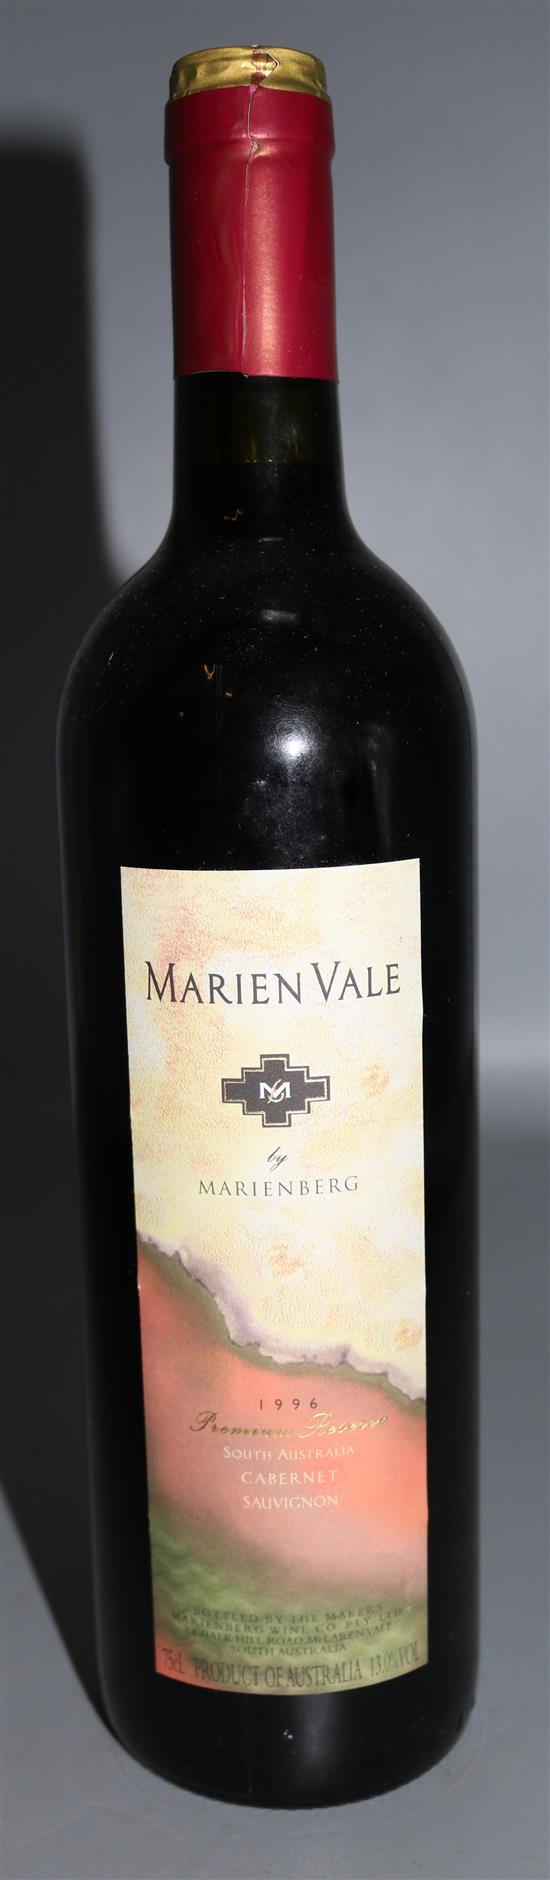 12 bottles Marienberg - Marien Vale